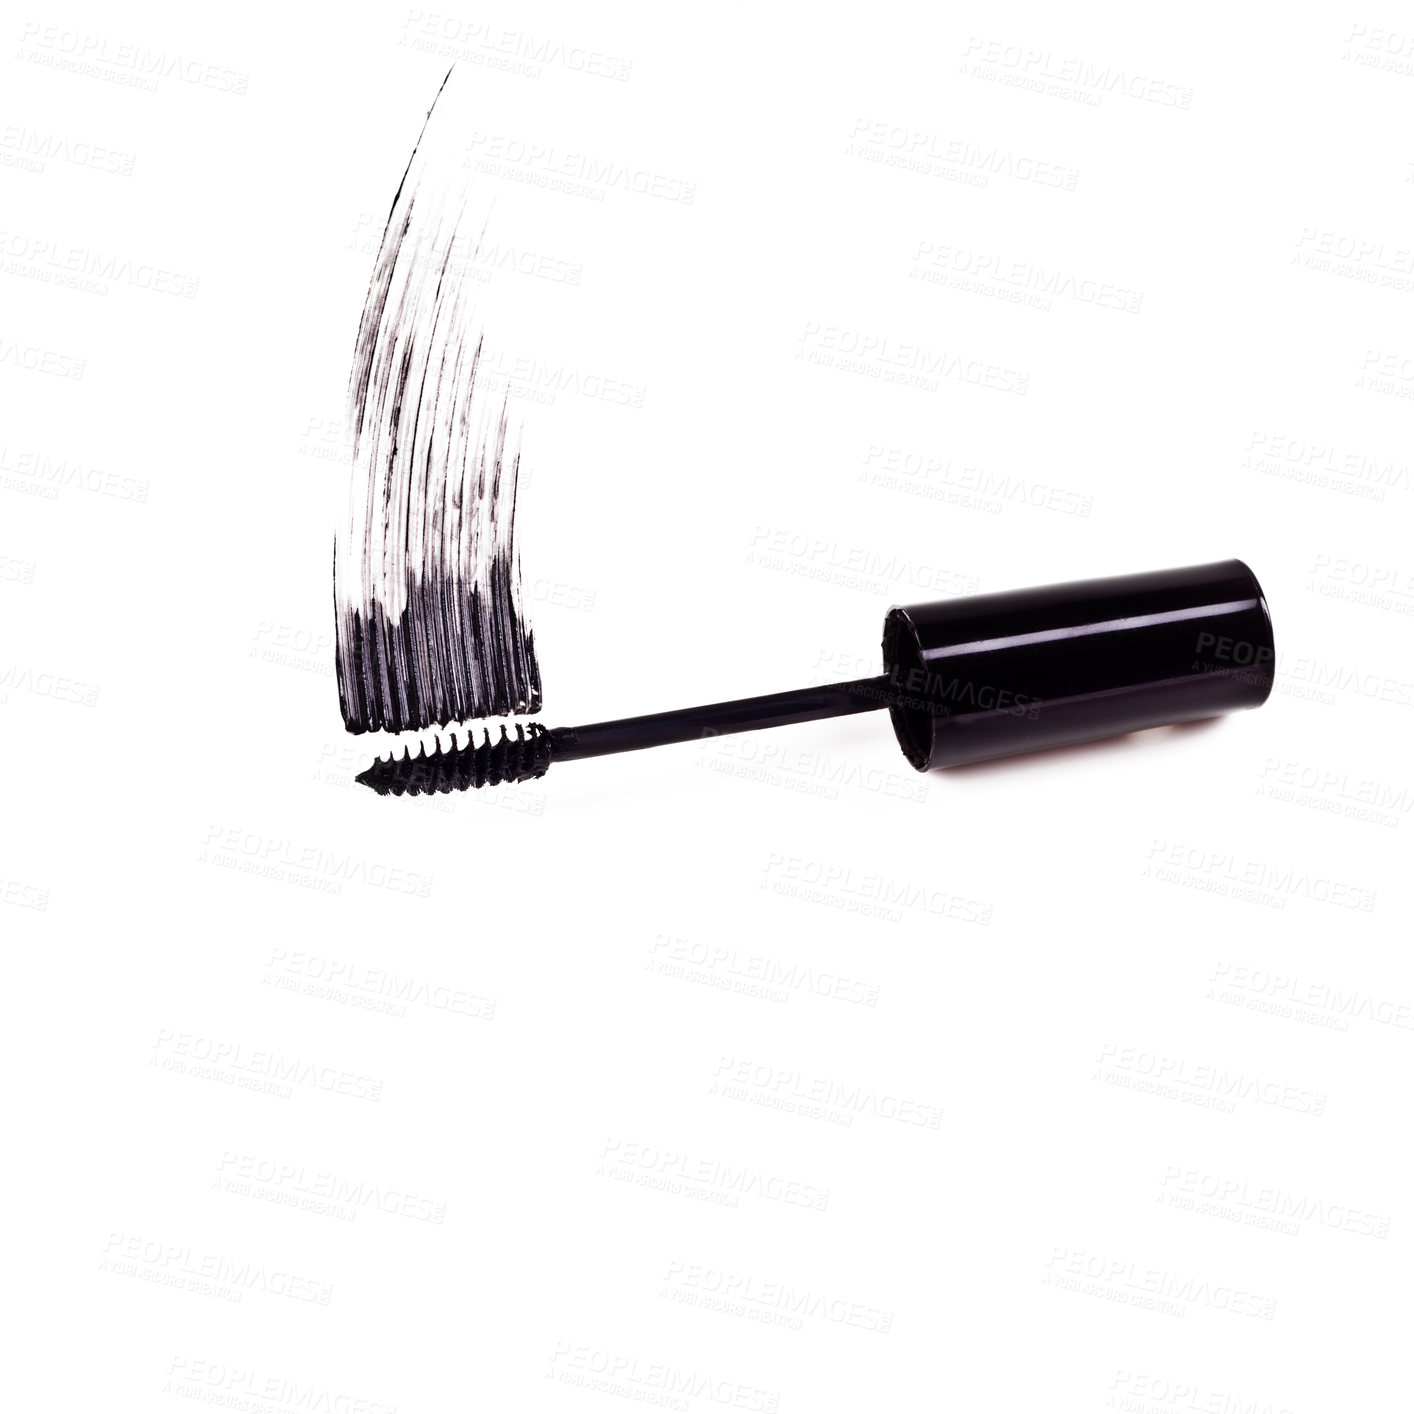 Buy stock photo Studio shot of a mascara brush smearing makeup against a white background